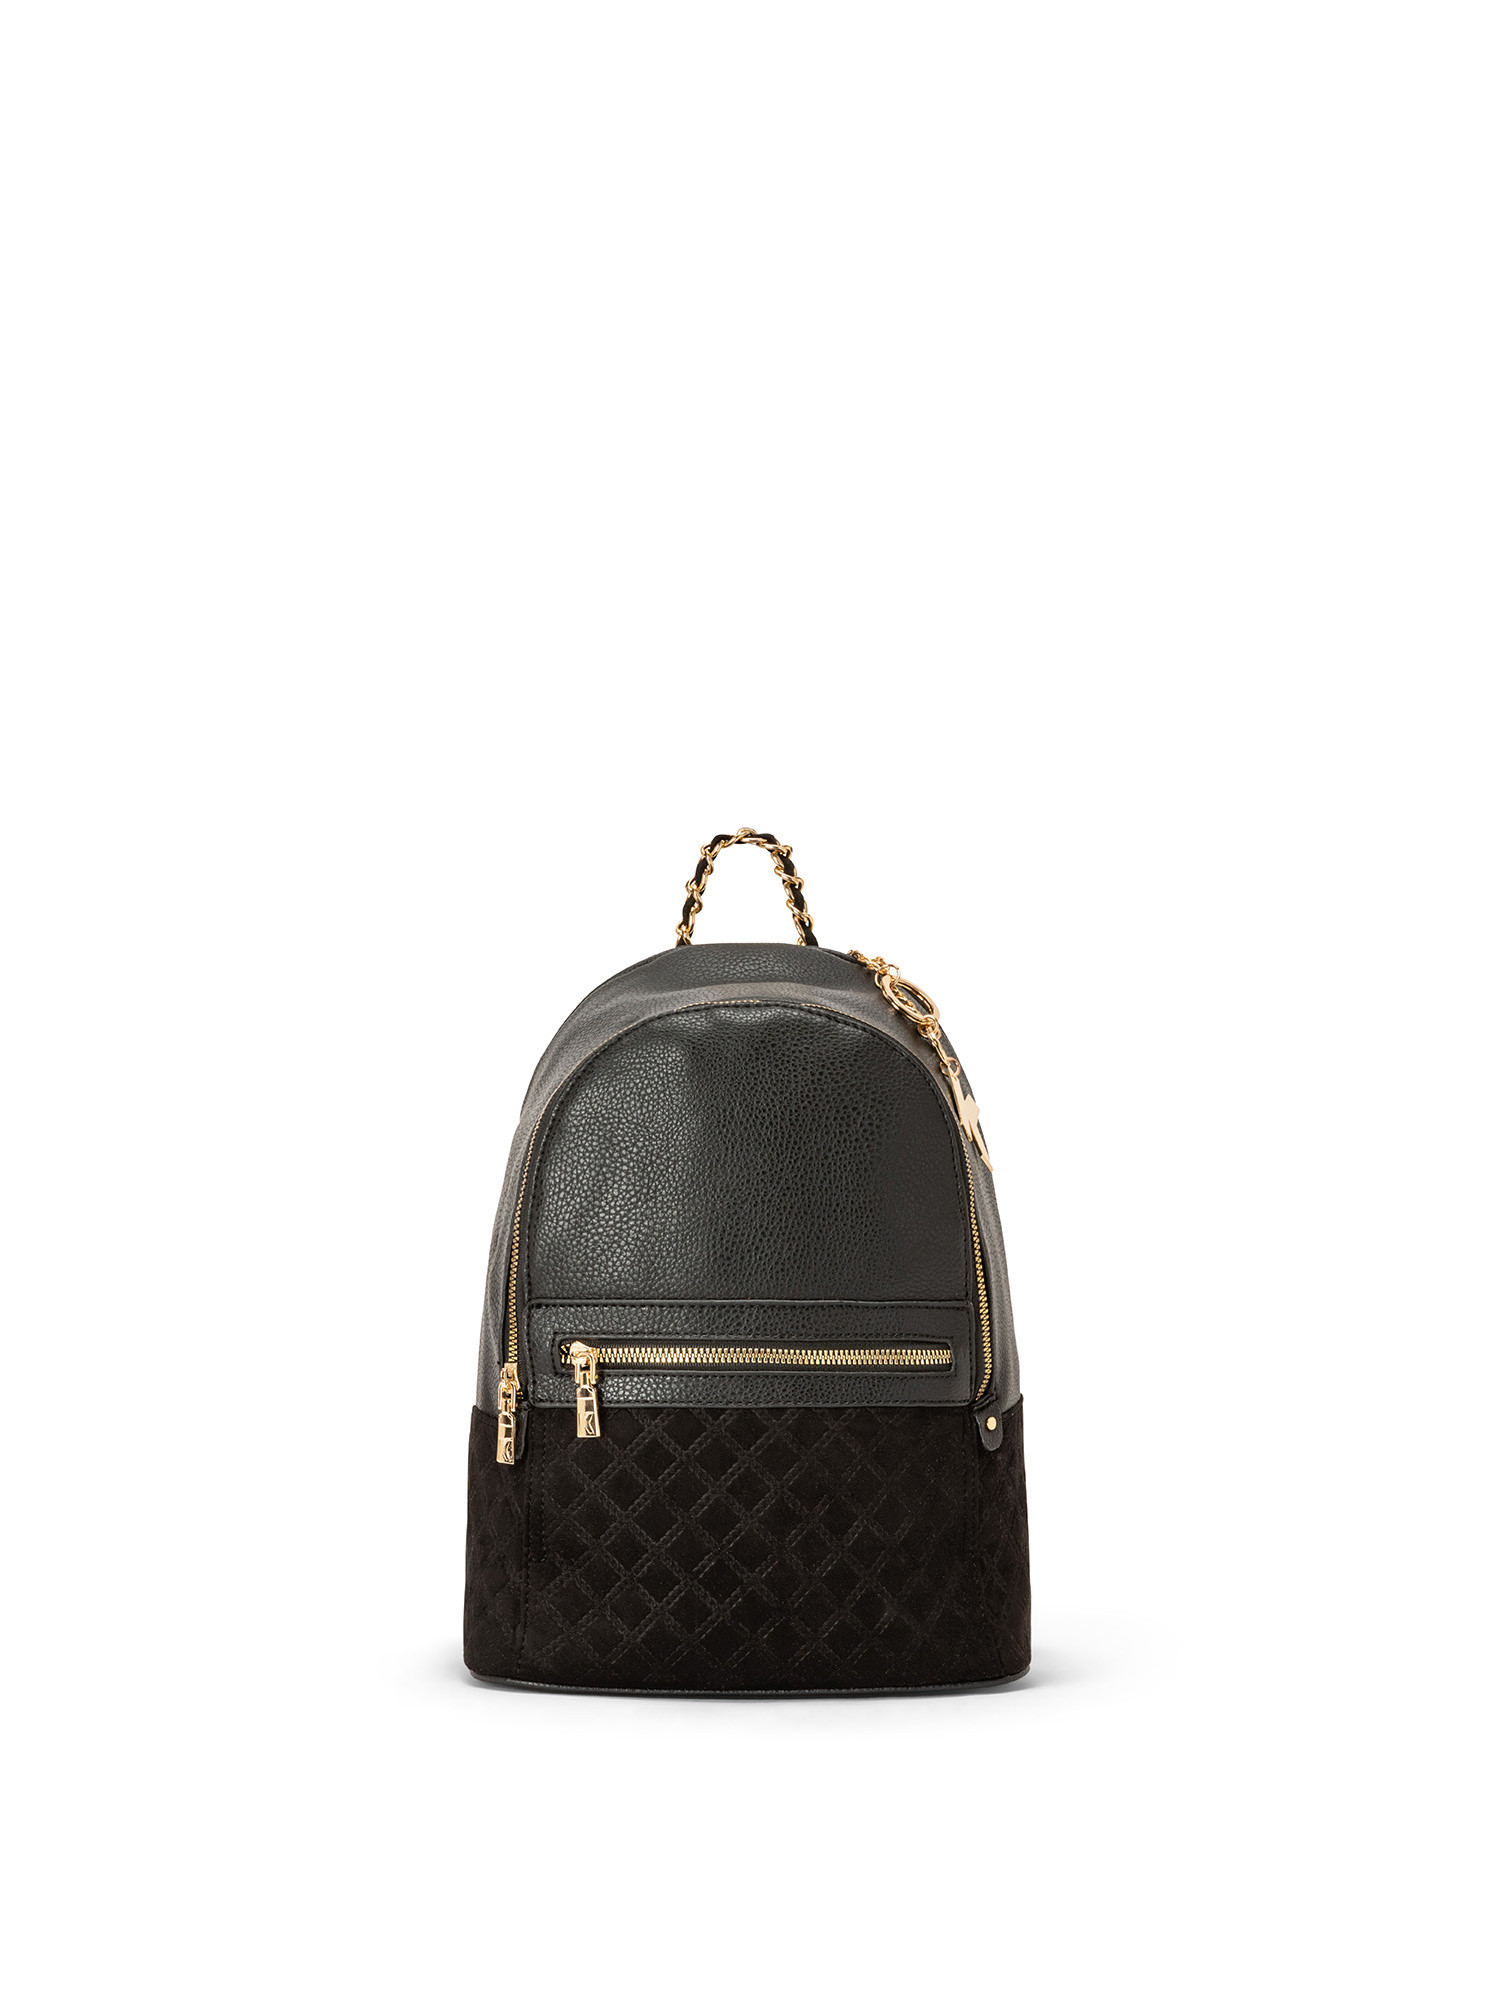 Koan - Backpack with print, Black, large image number 0